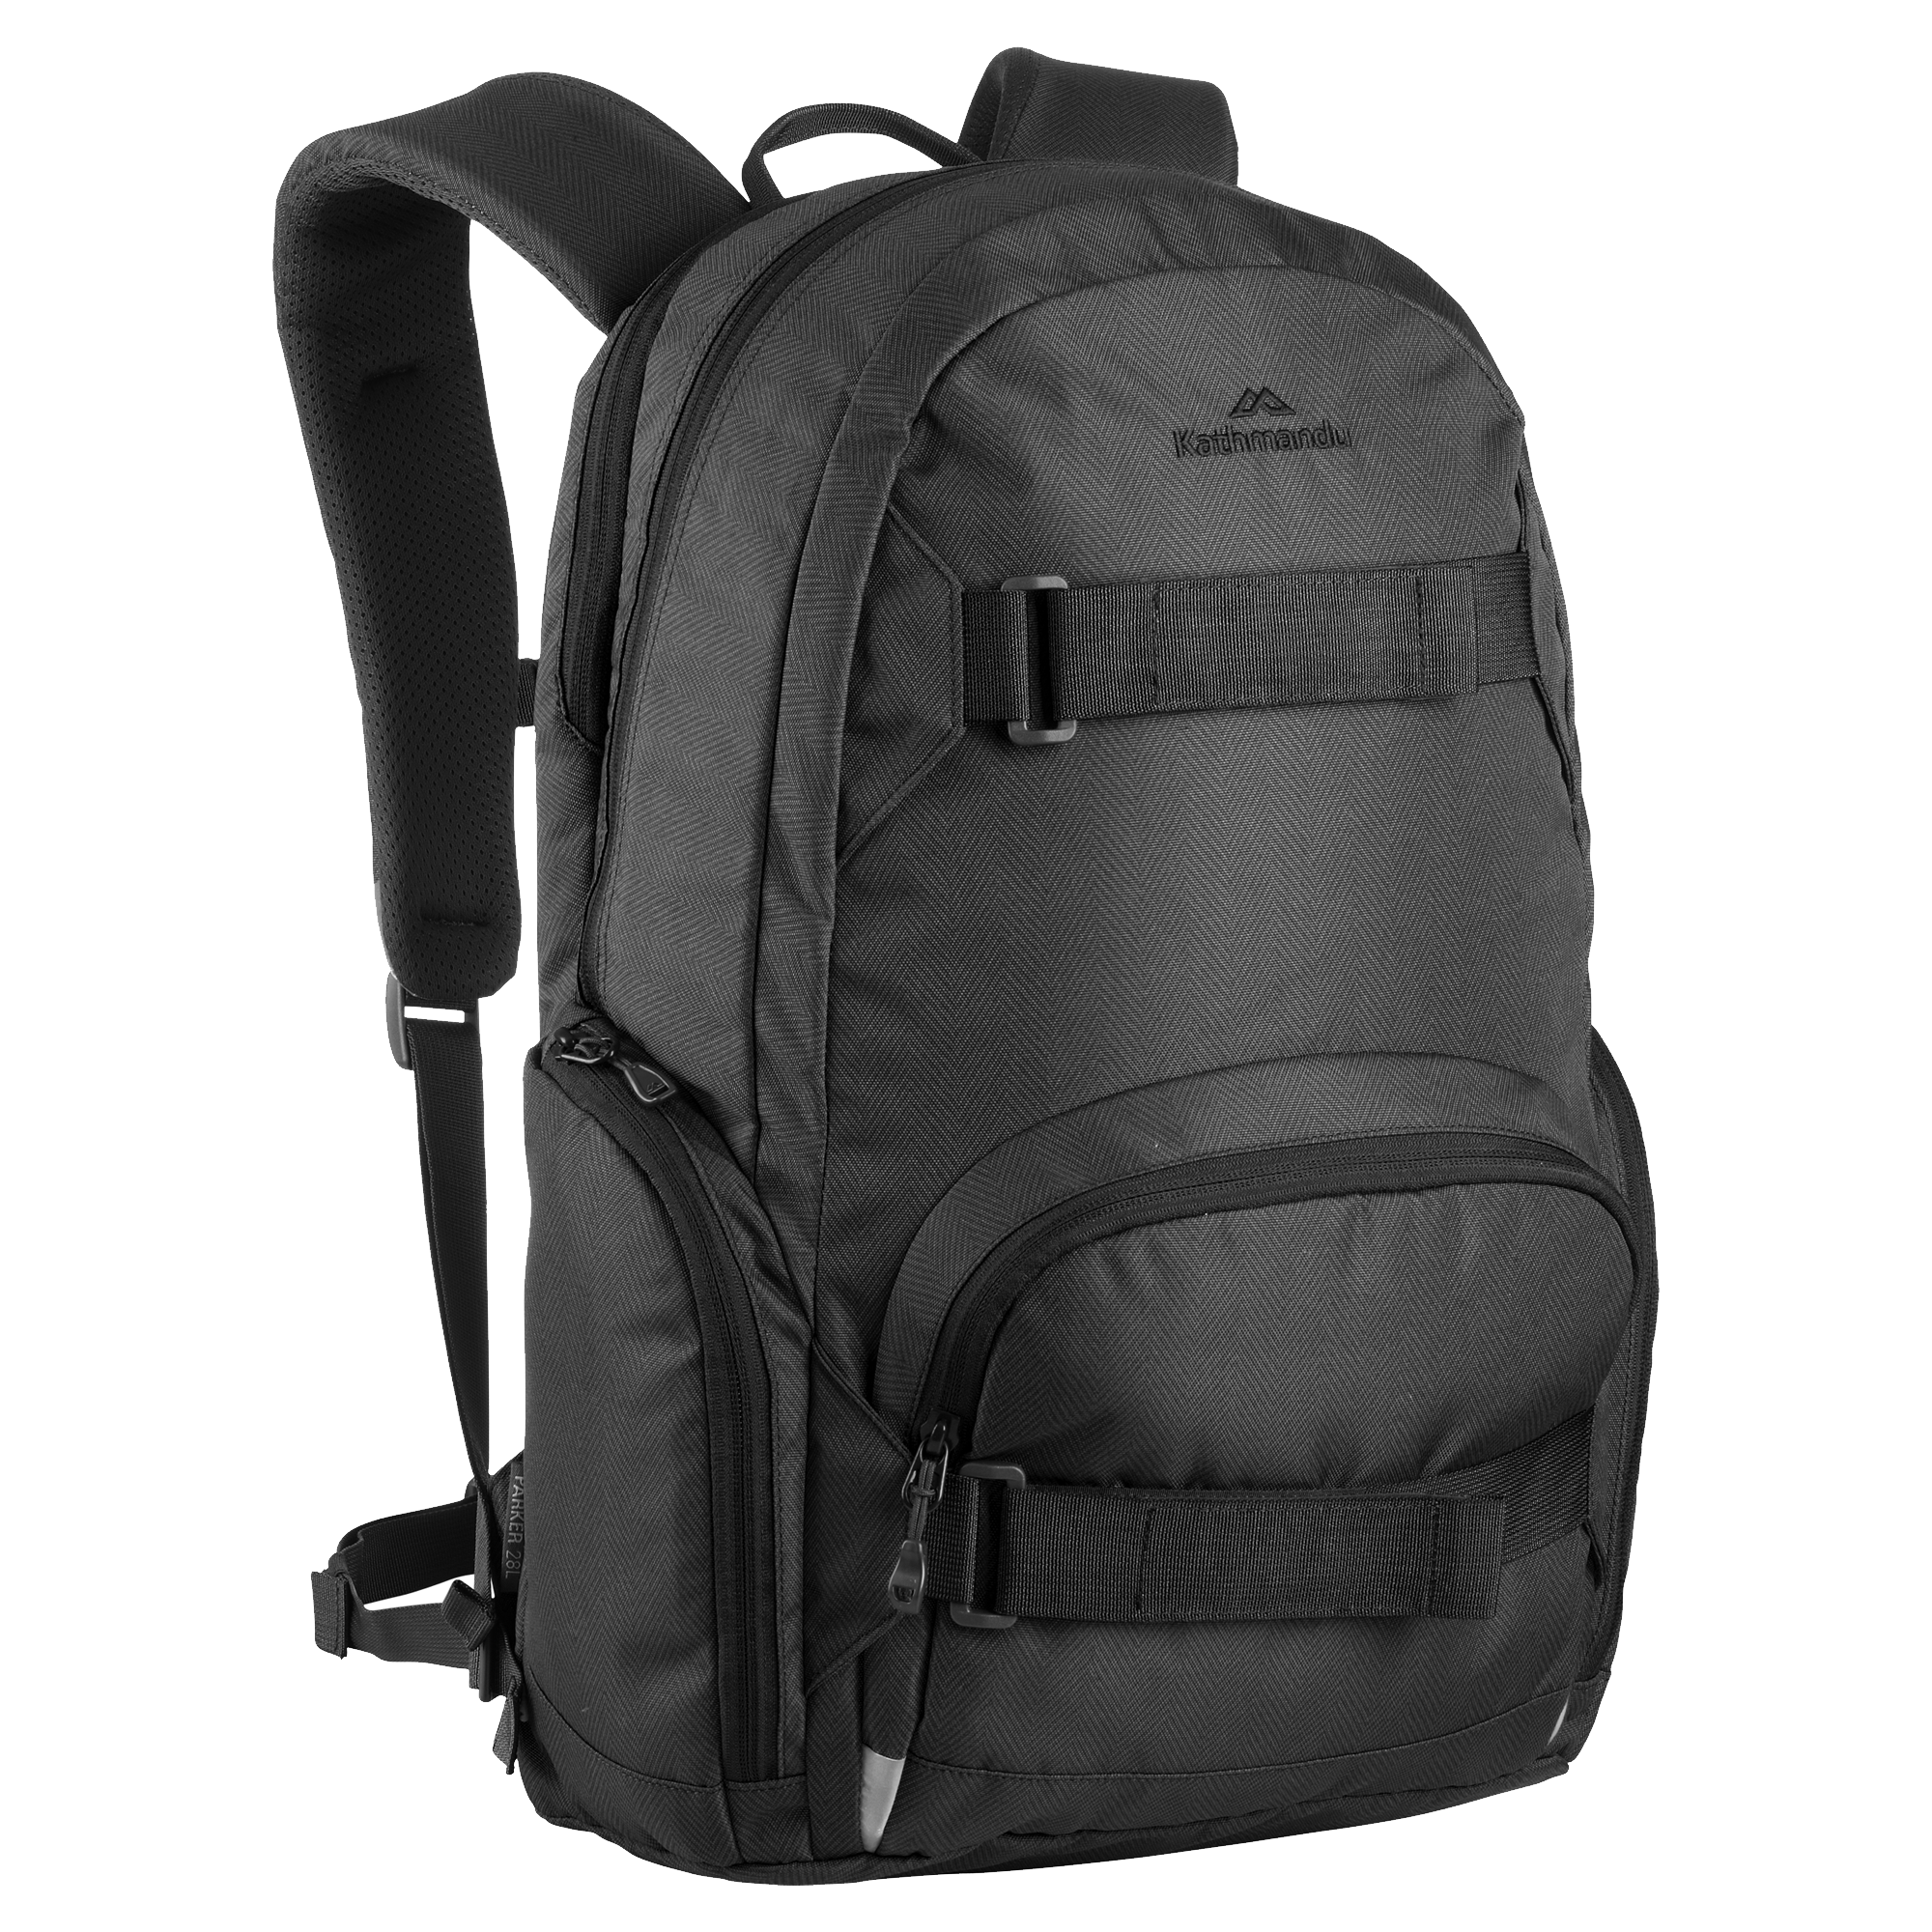 Backpack PNG image